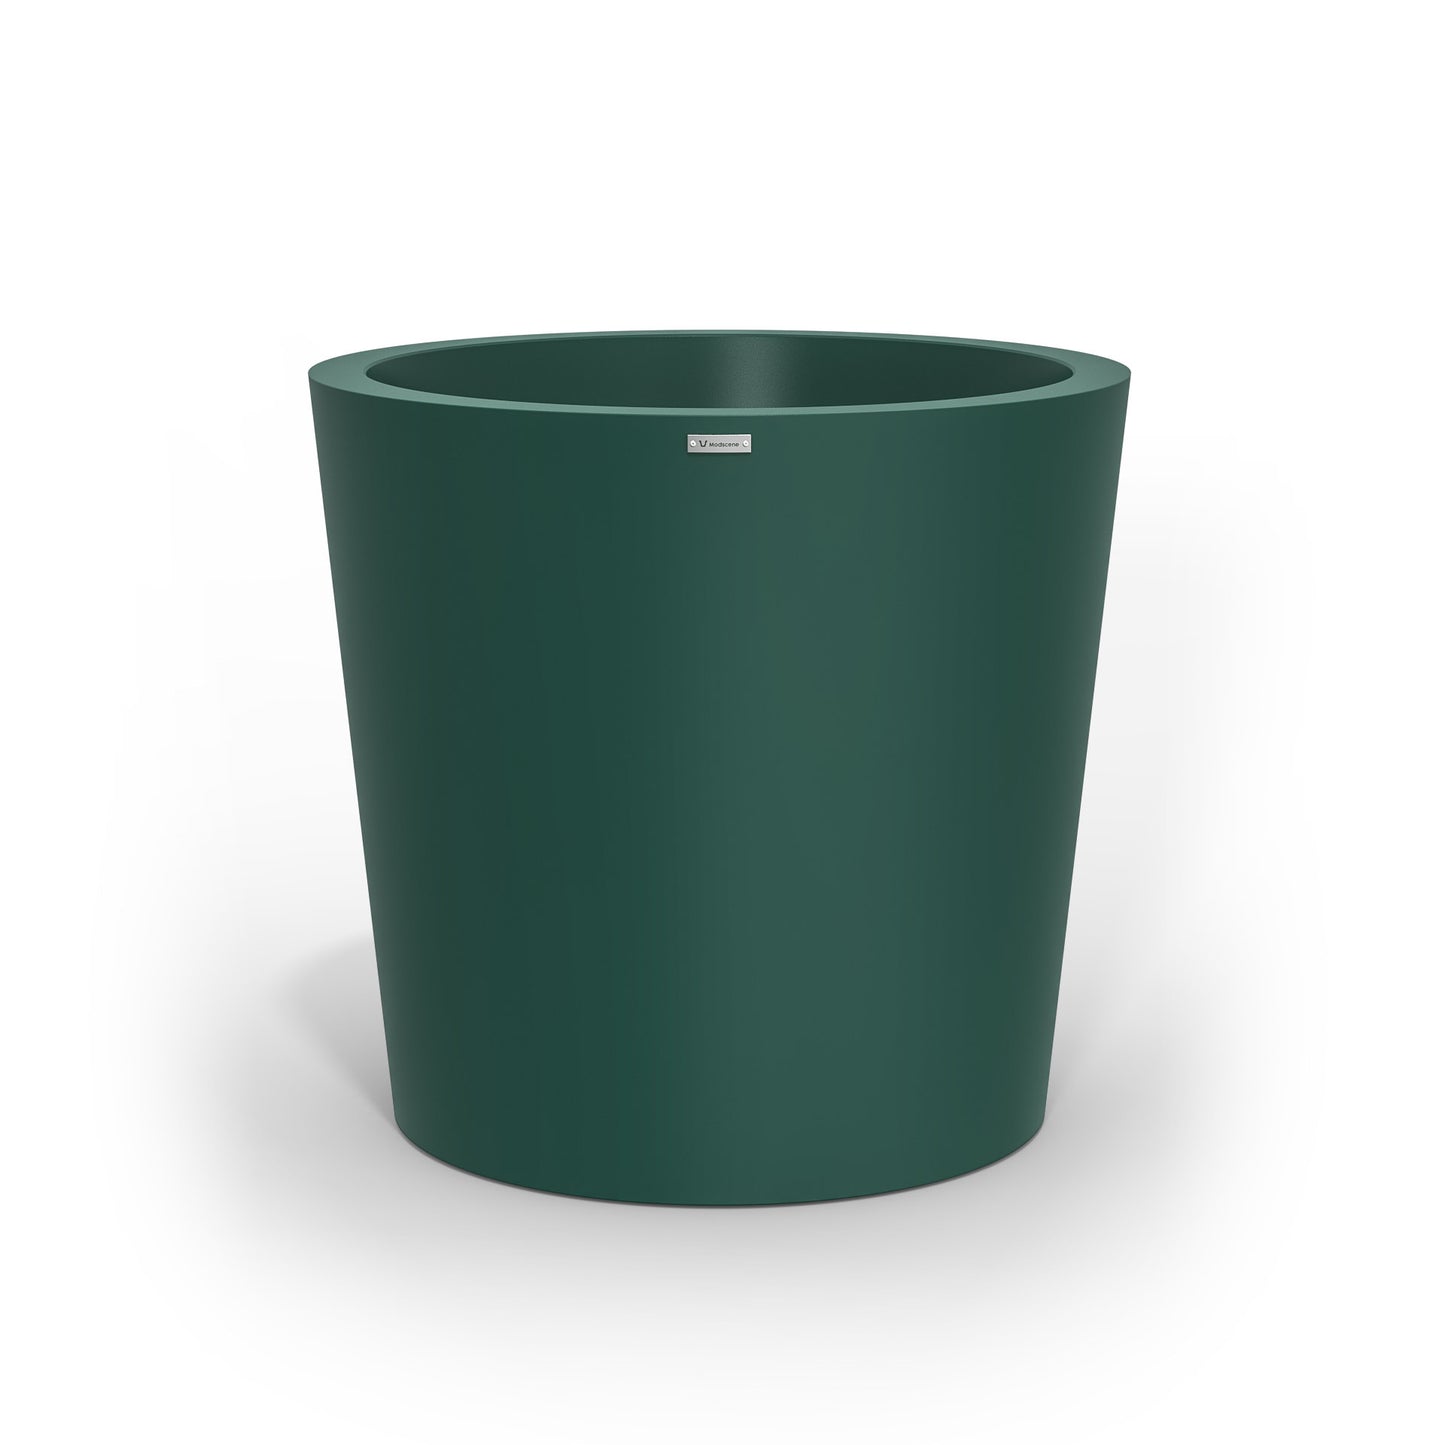 A large Modscene pot planter in an emerald green colour.